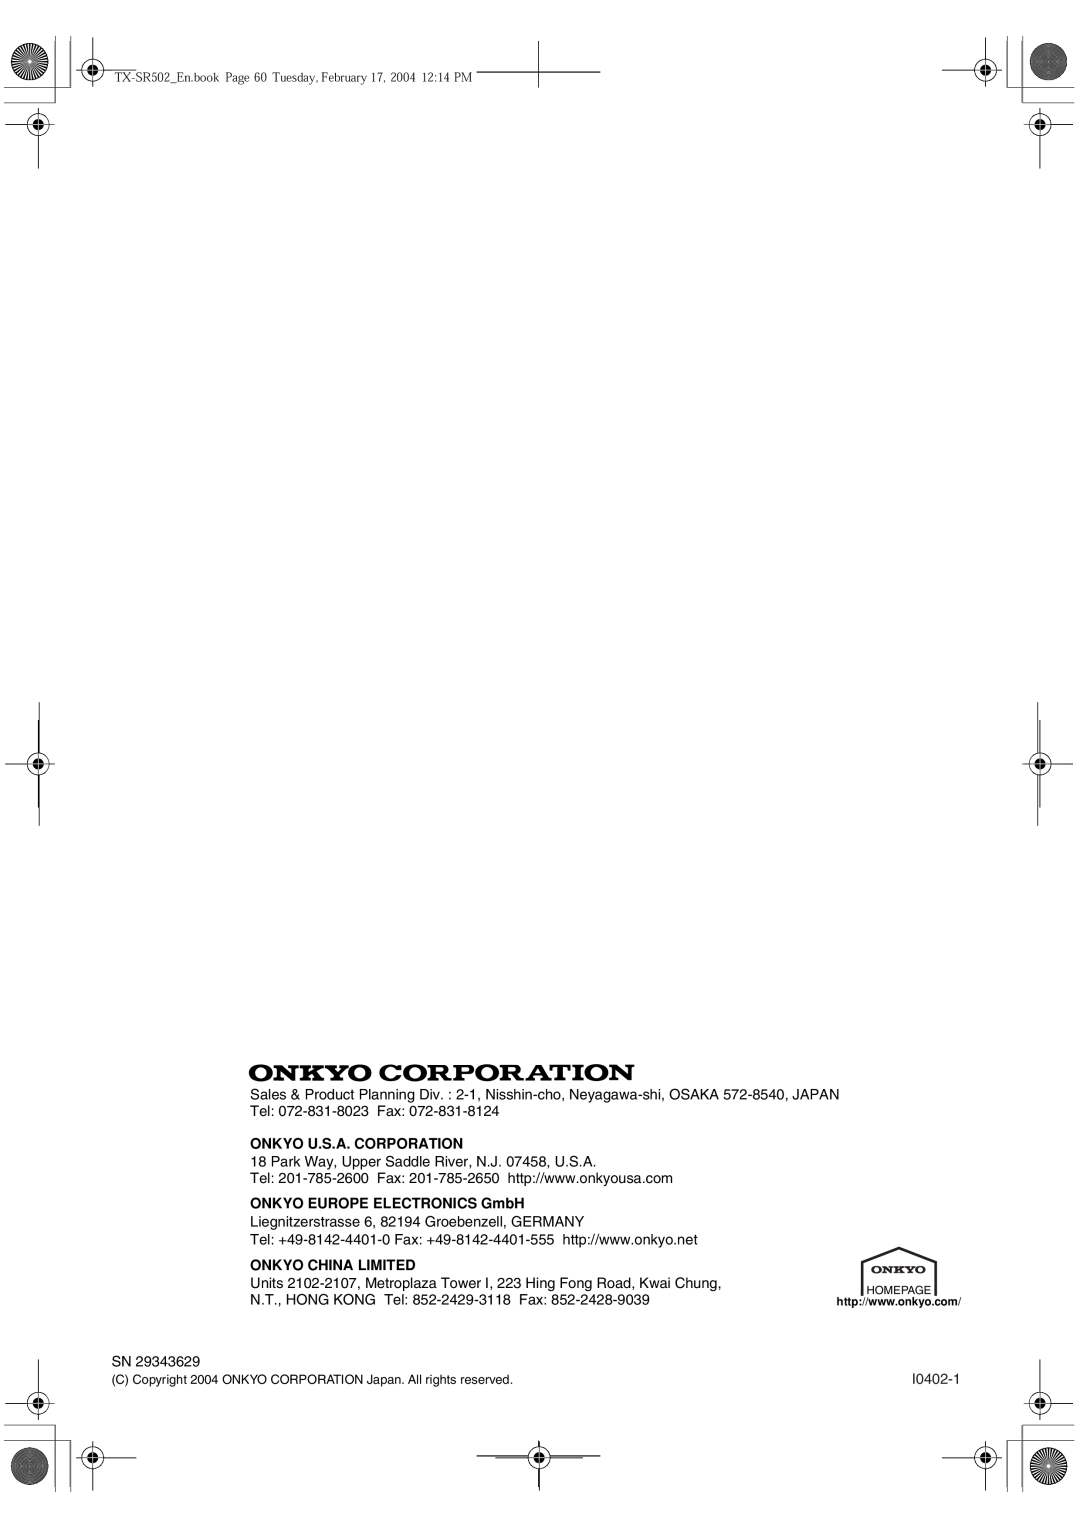 Onkyo TX-SR502E instruction manual Onkyo U.S.A. Corporation, ONKYO EUROPE ELECTRONICS GmbH, Onkyo China Limited 